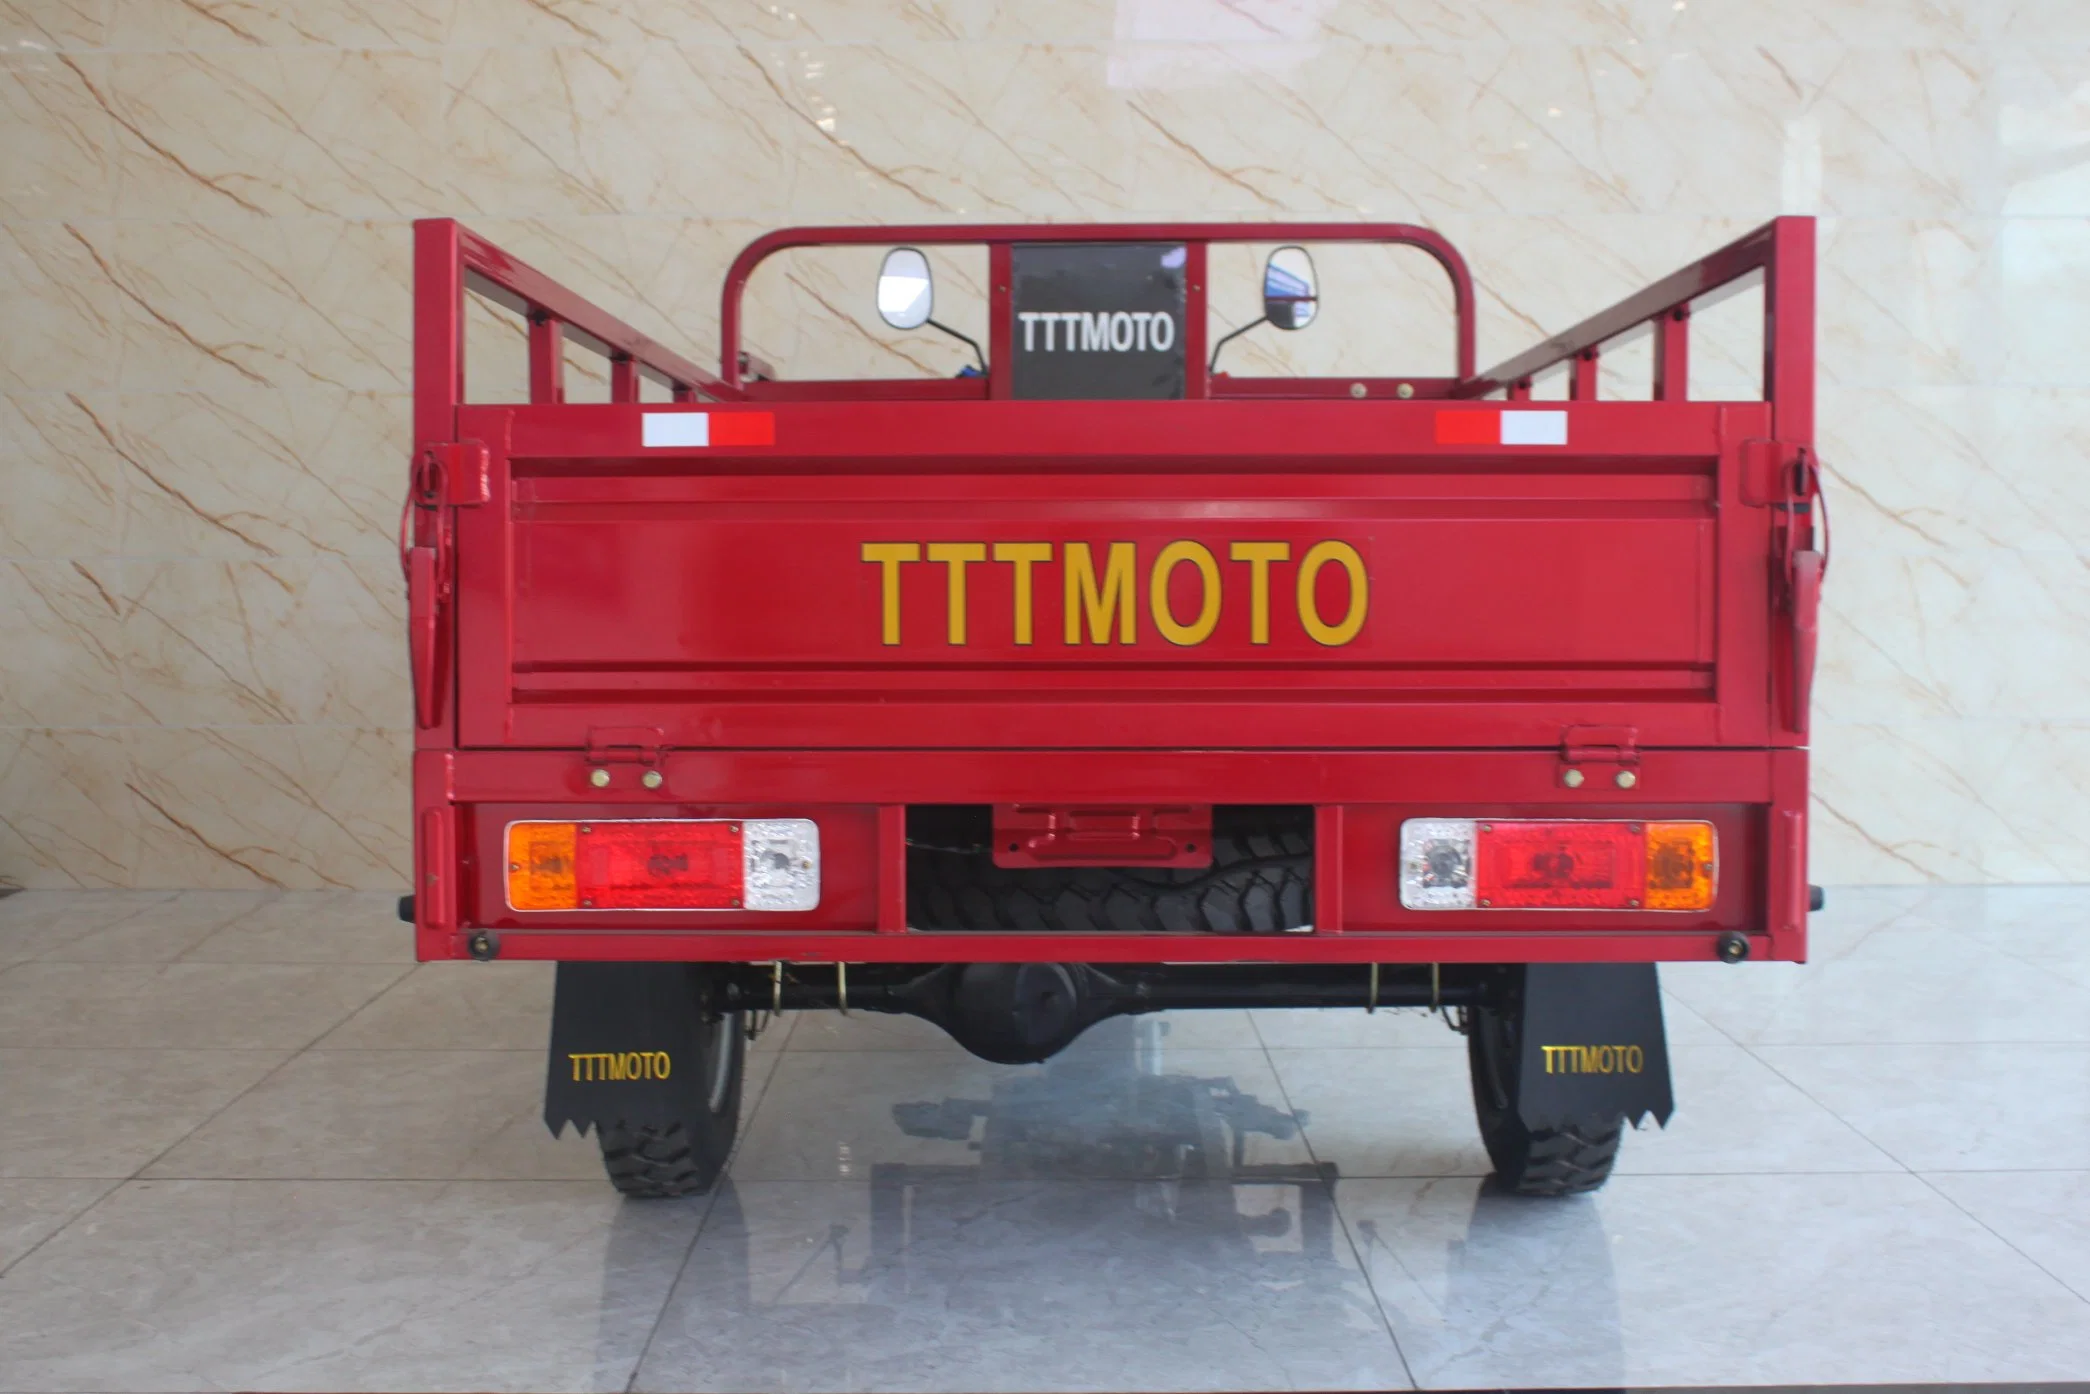 Dumper Truck for Sale Pakistan Electric Rickshaw Passenger/Cargo Bike Tricycle Parts